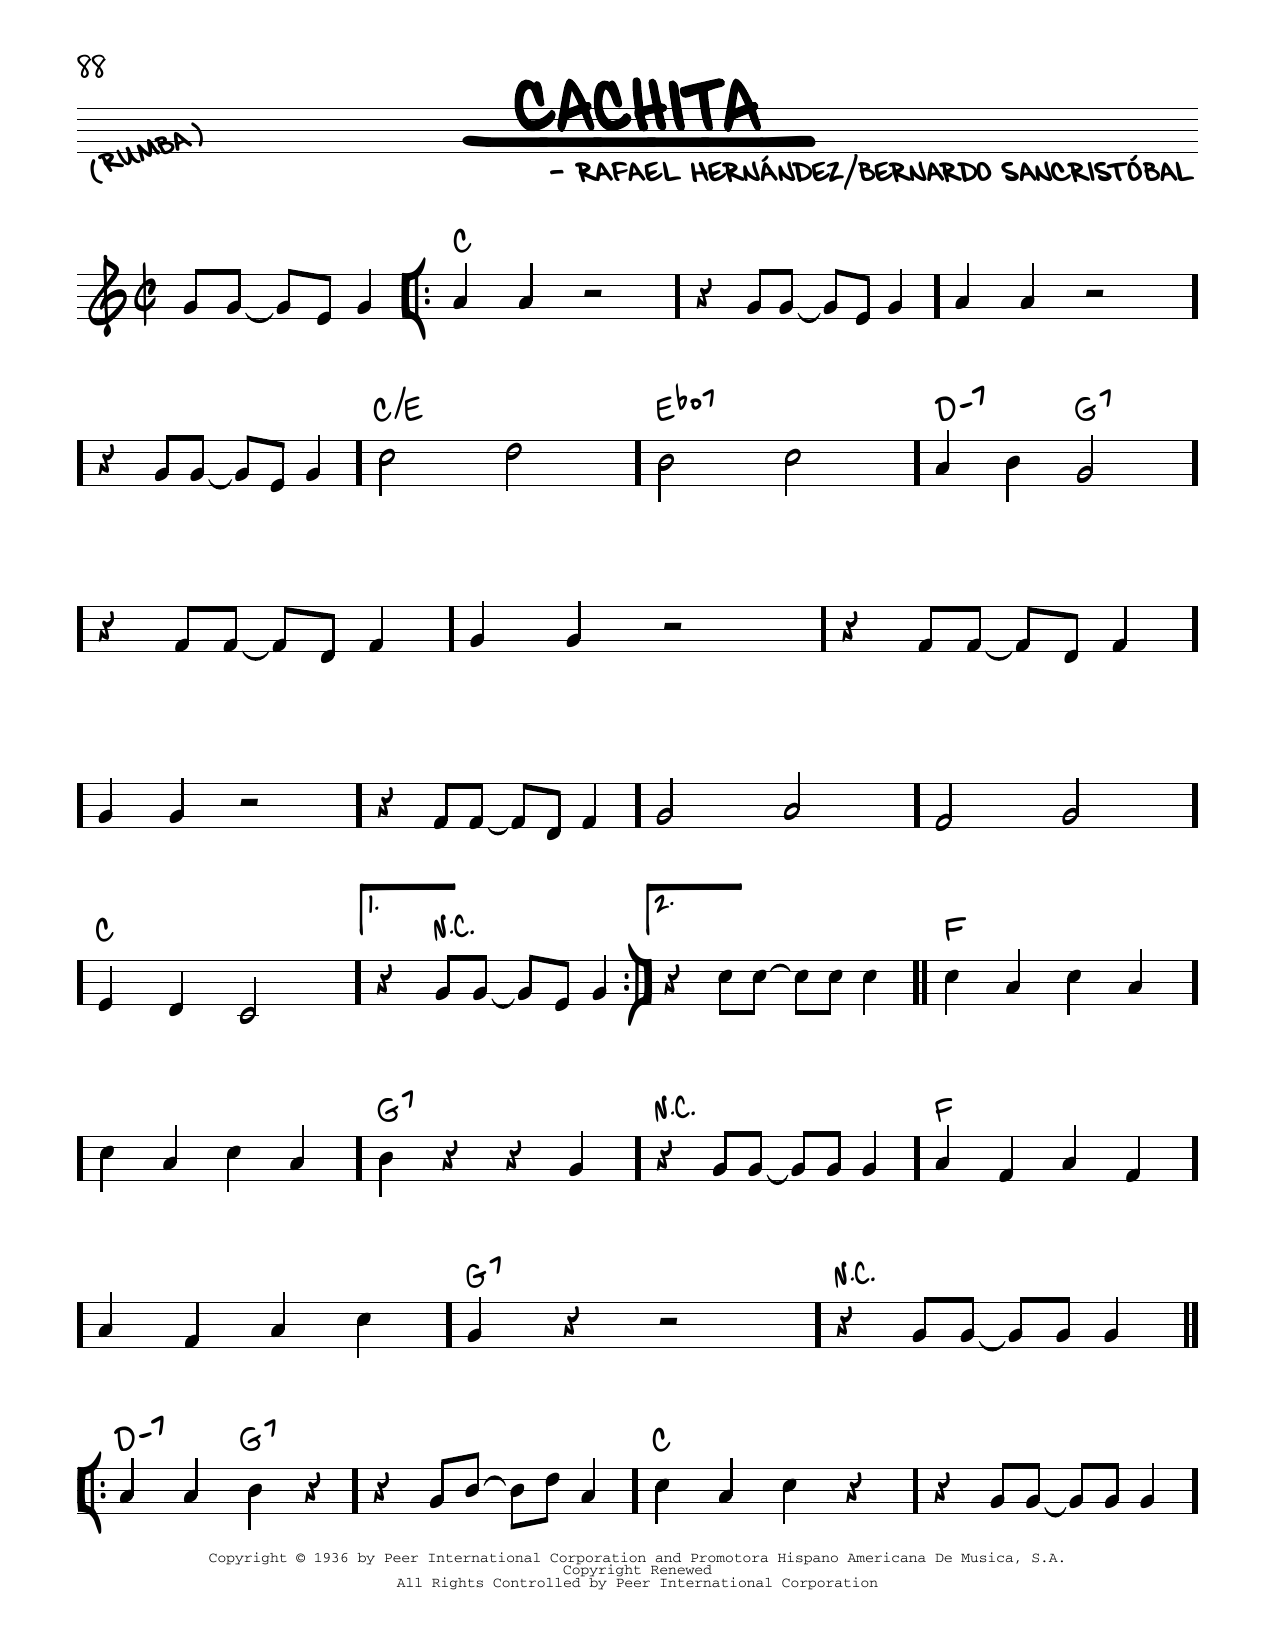 Rafael Hernandez Cachita Sheet Music Notes & Chords for Piano, Vocal & Guitar Chords (Right-Hand Melody) - Download or Print PDF